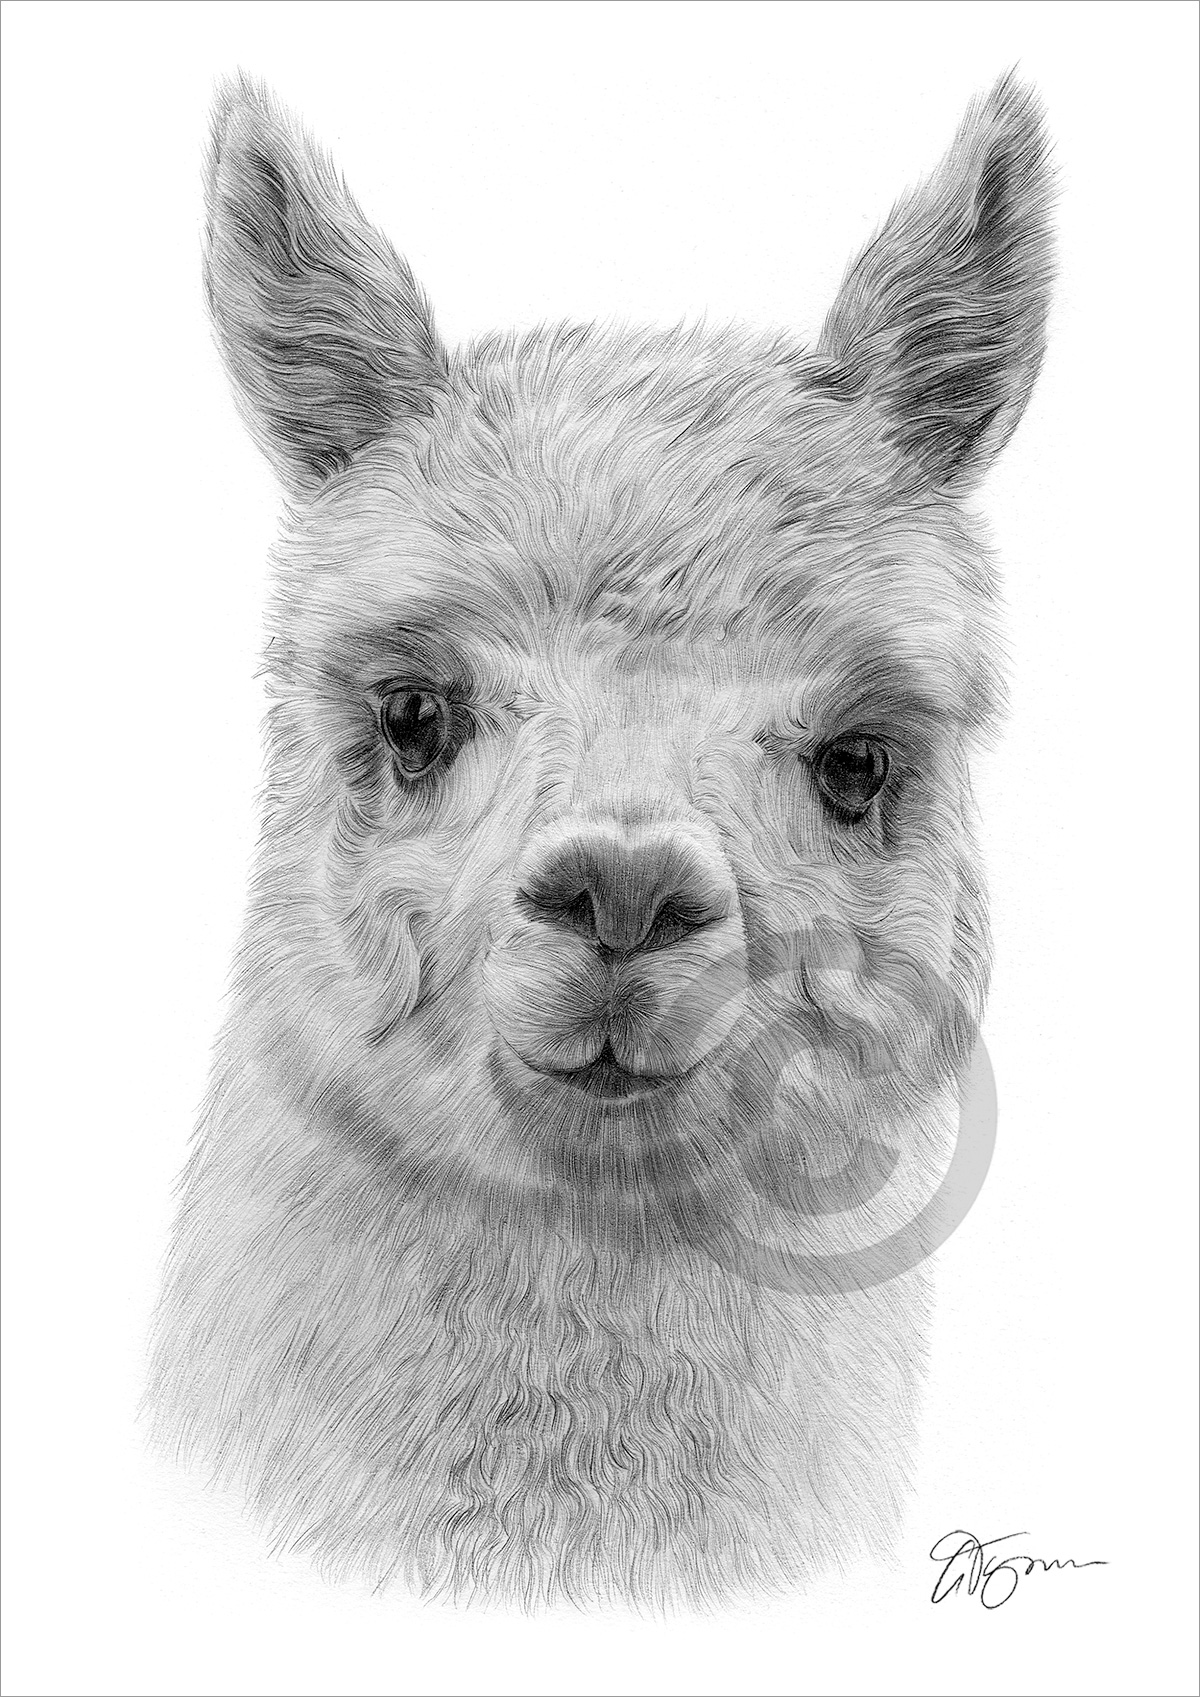 Pencil drawing of an alpaca by artist Gary Tymon